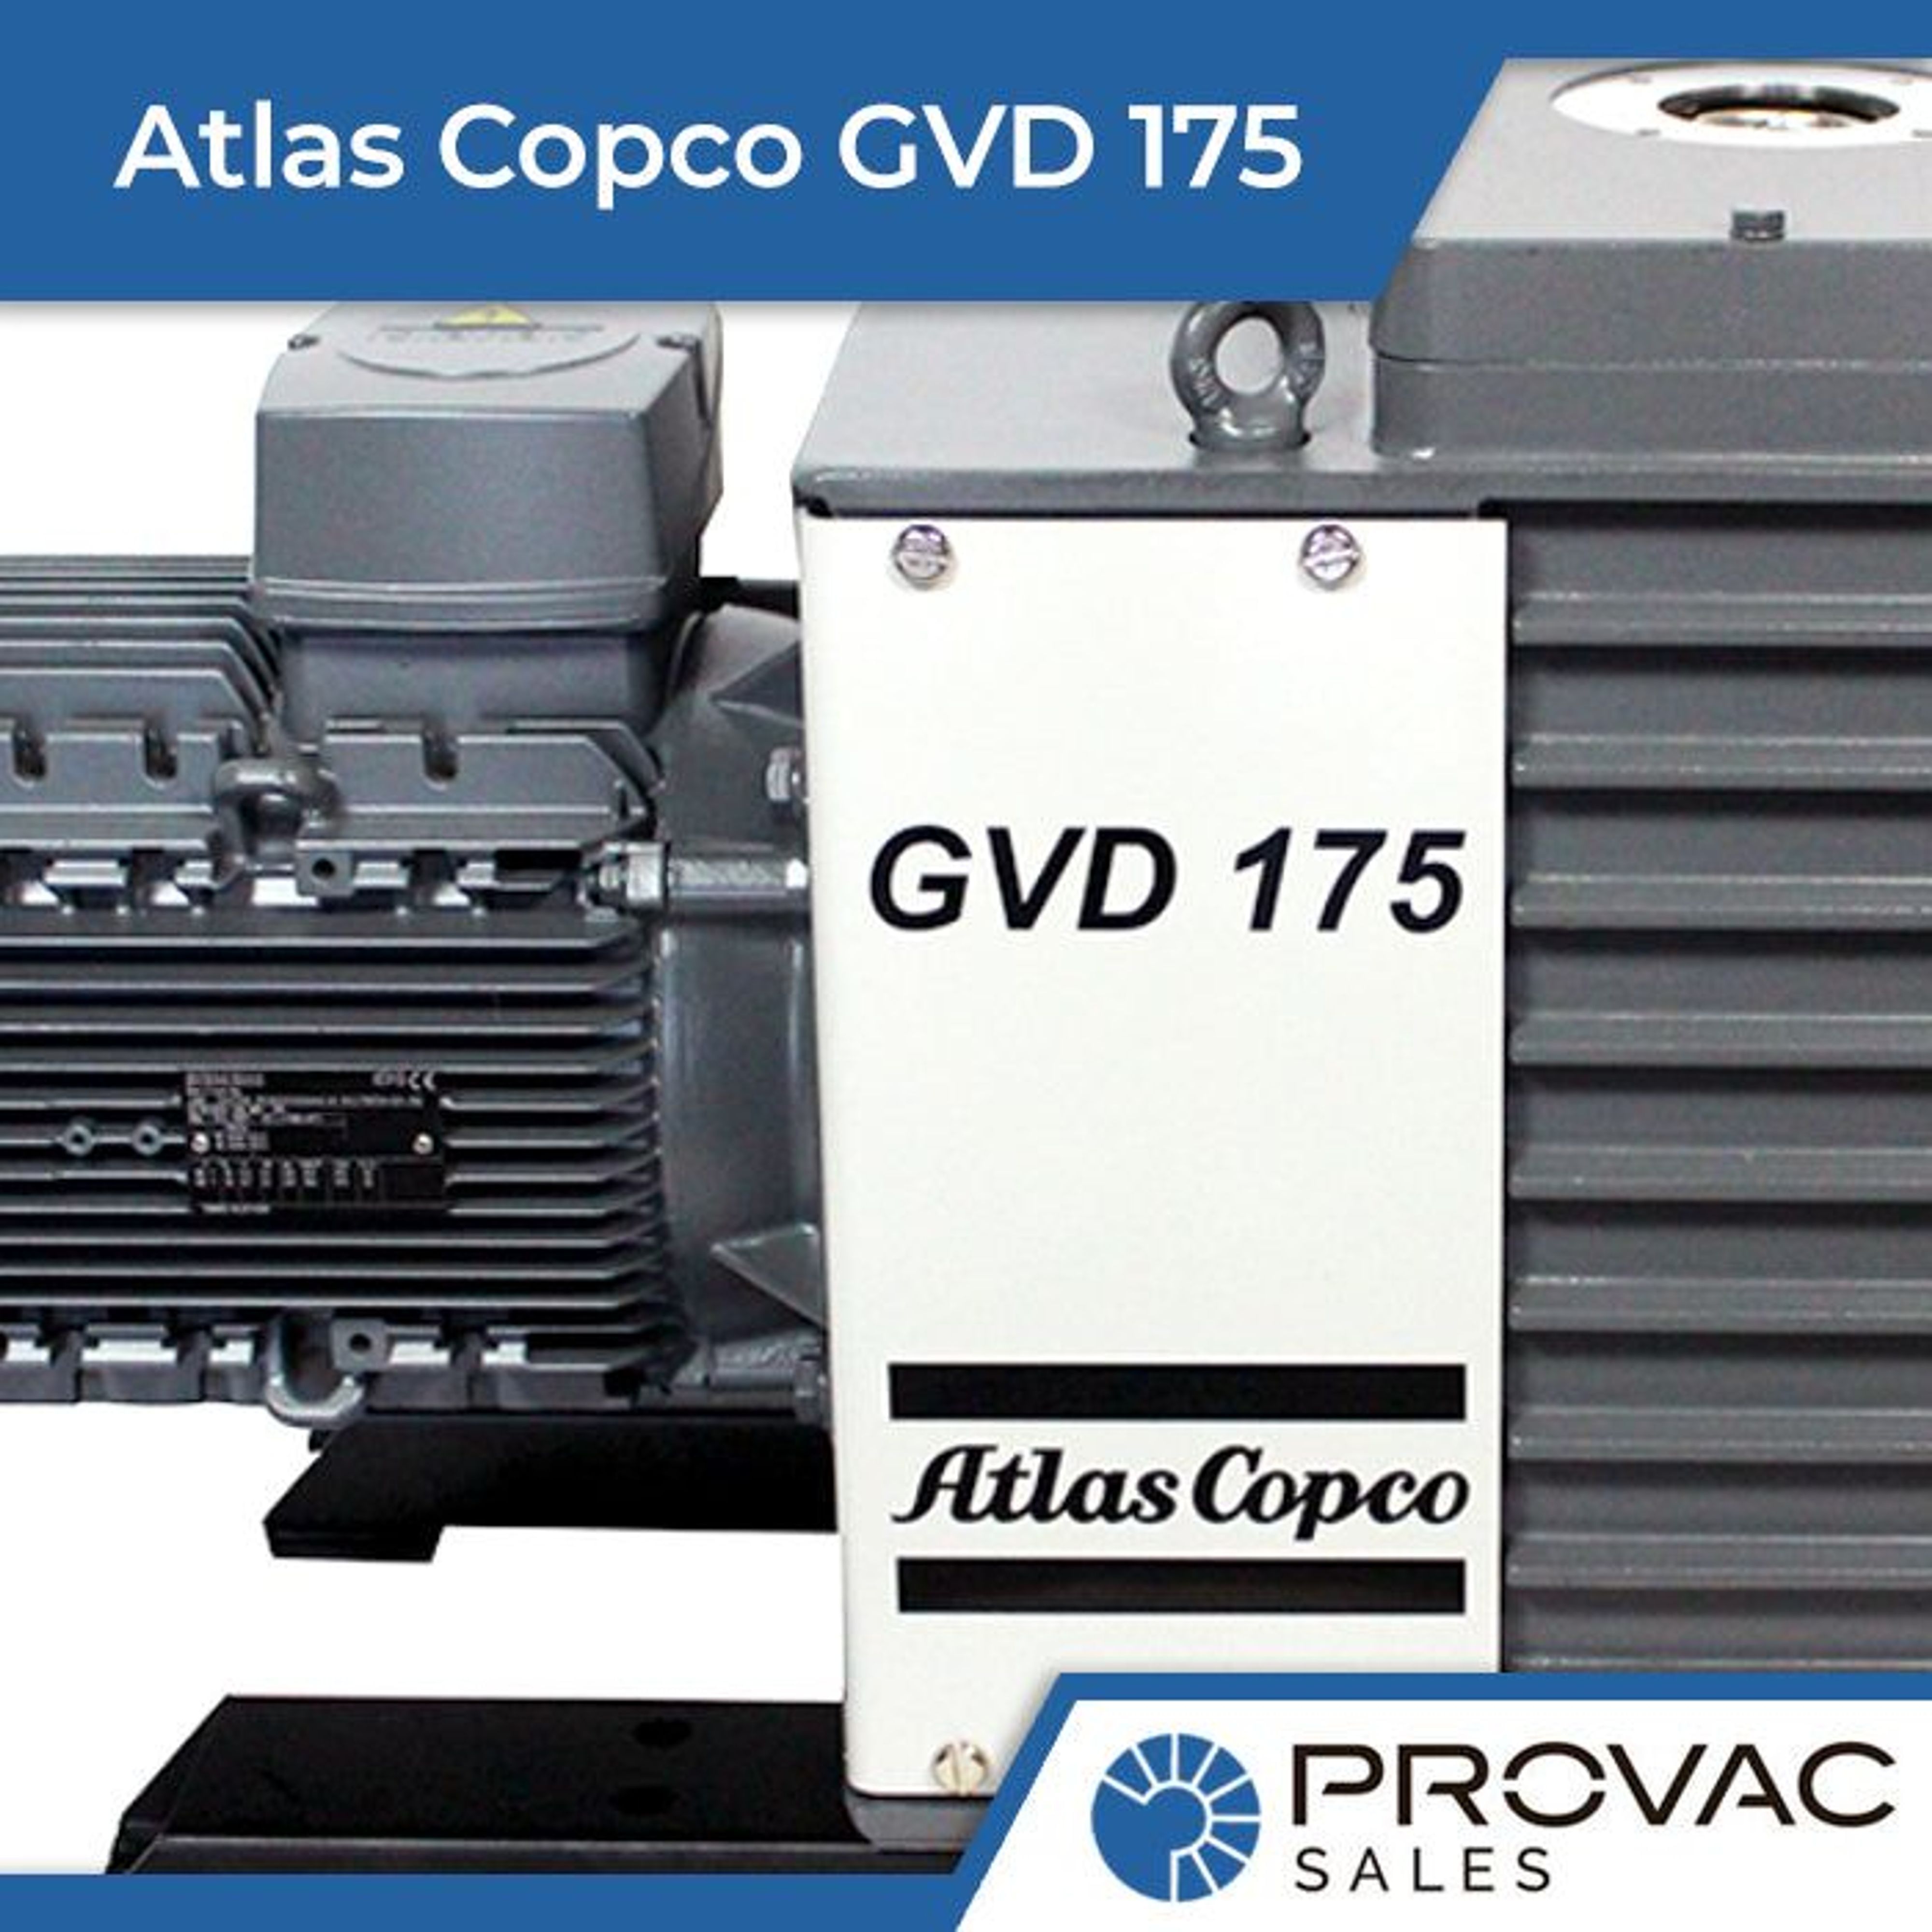 Product Spotlight: Atlas Copco GVD 175 Rotary Vane Pump Background